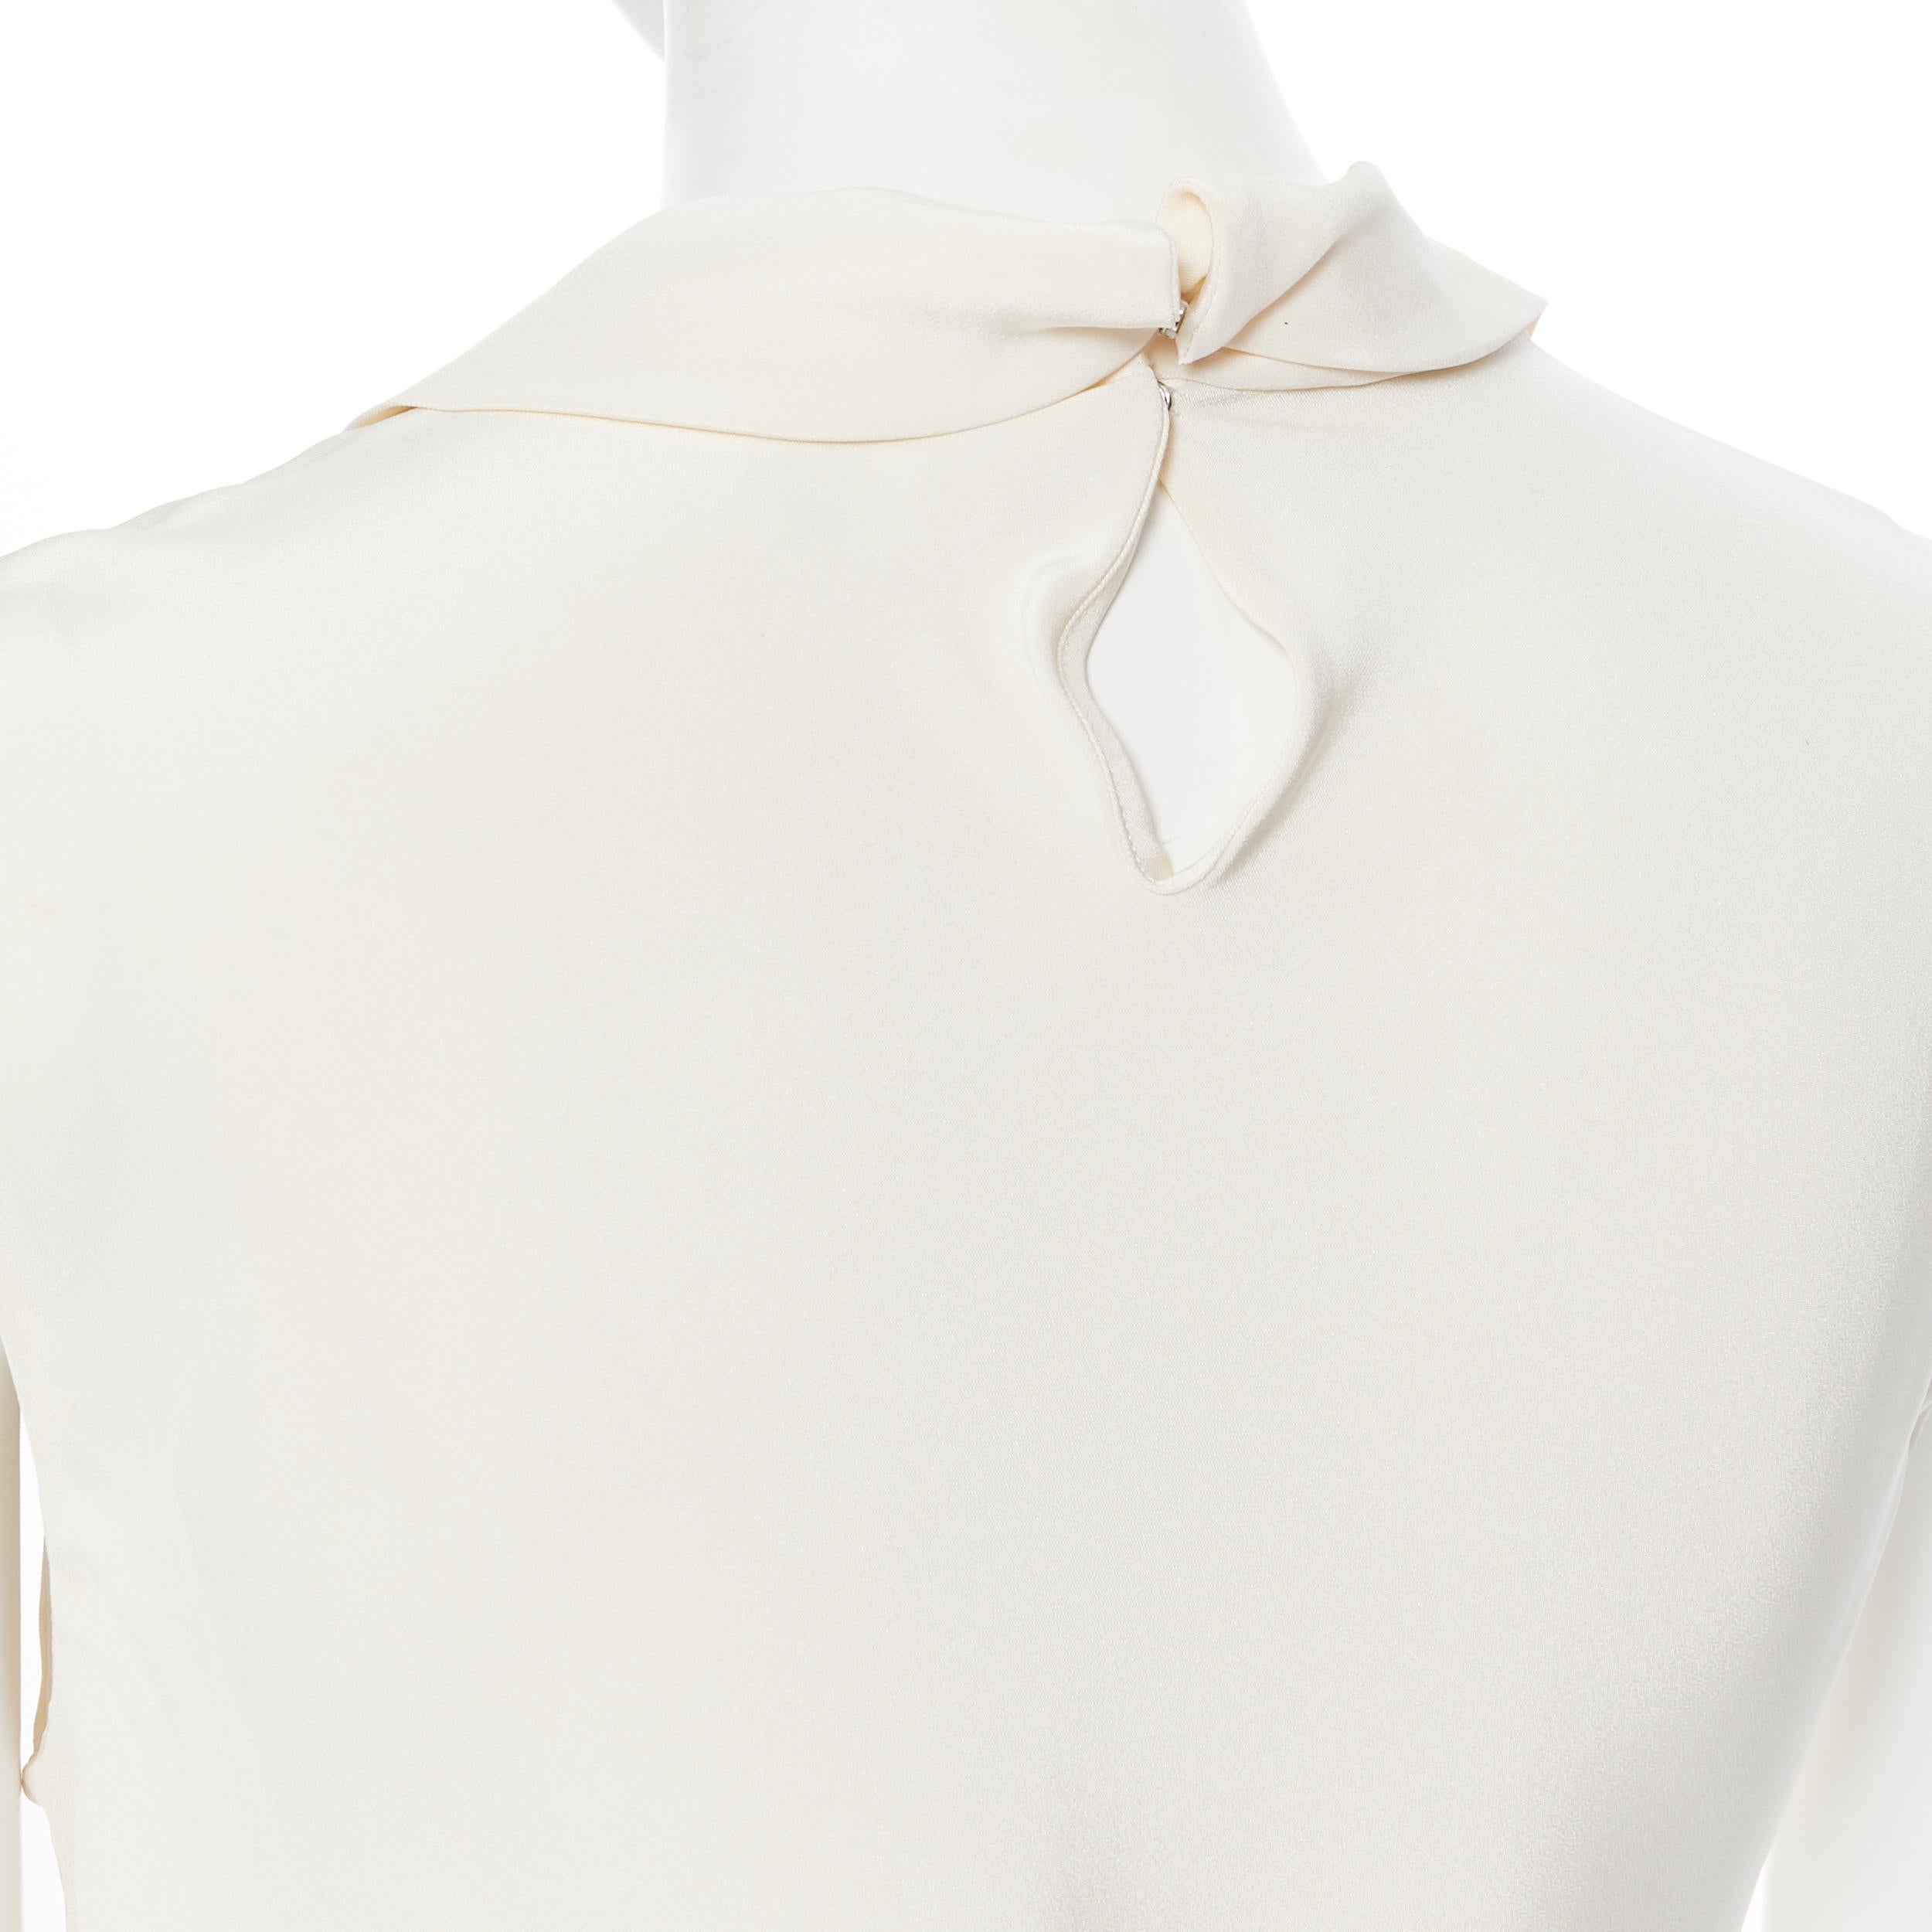 OSCAR DE LA RENTA R13 100% silk beige cream knot neckline sleeveless top US4 3